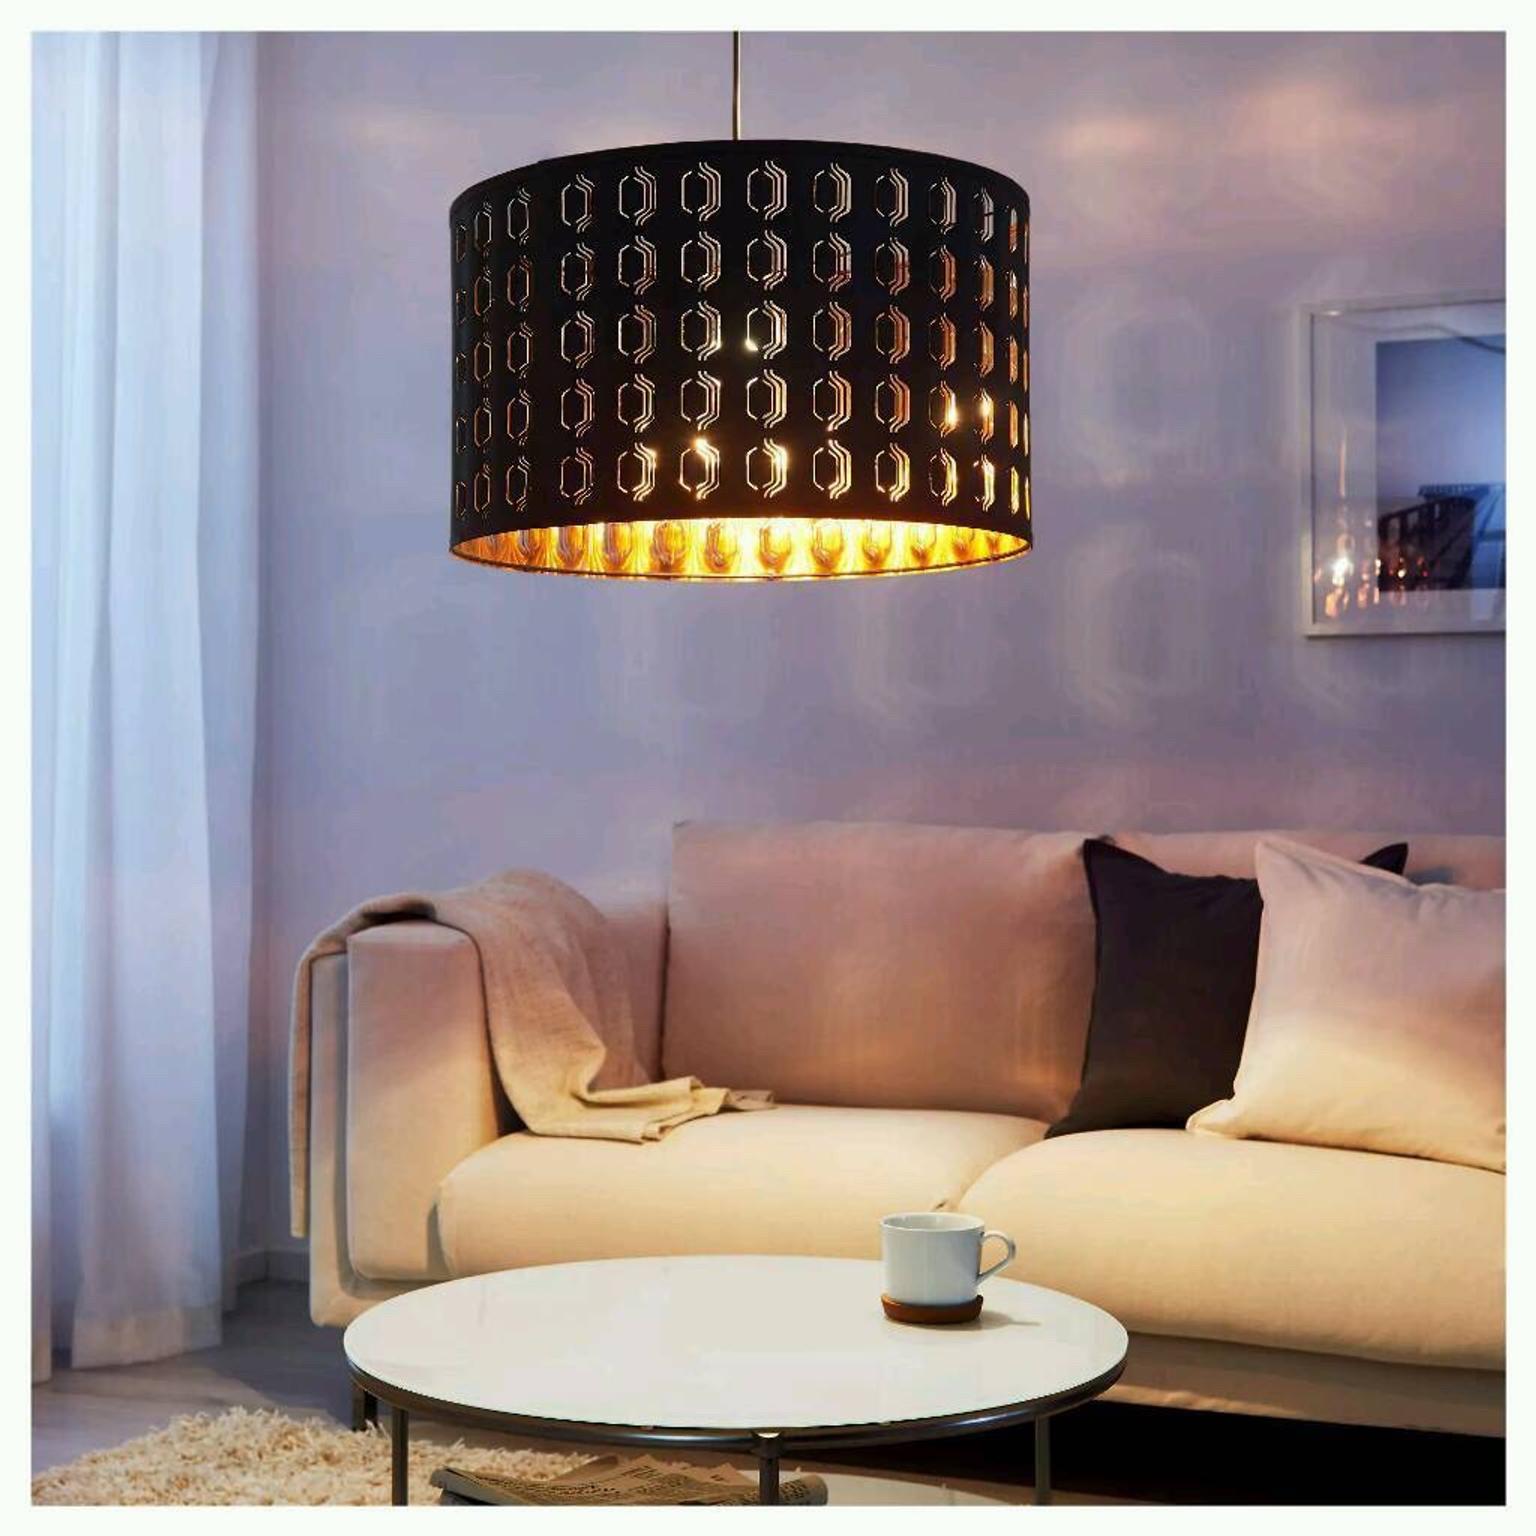 Like New Ikea Nymo Lamp Shade In E14 Hamlets Fur 10 00 Zum